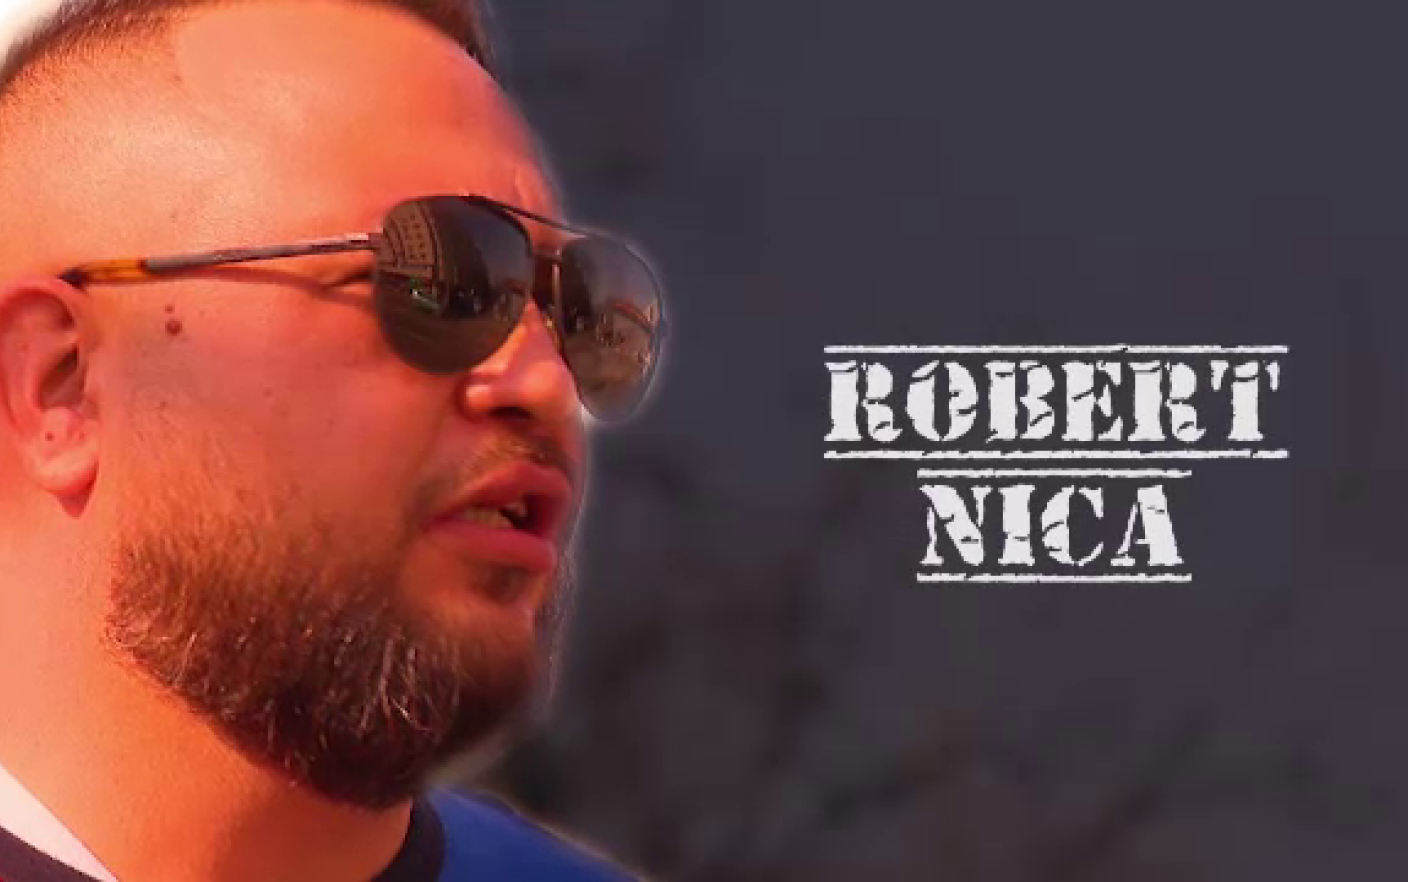 Robert Nica